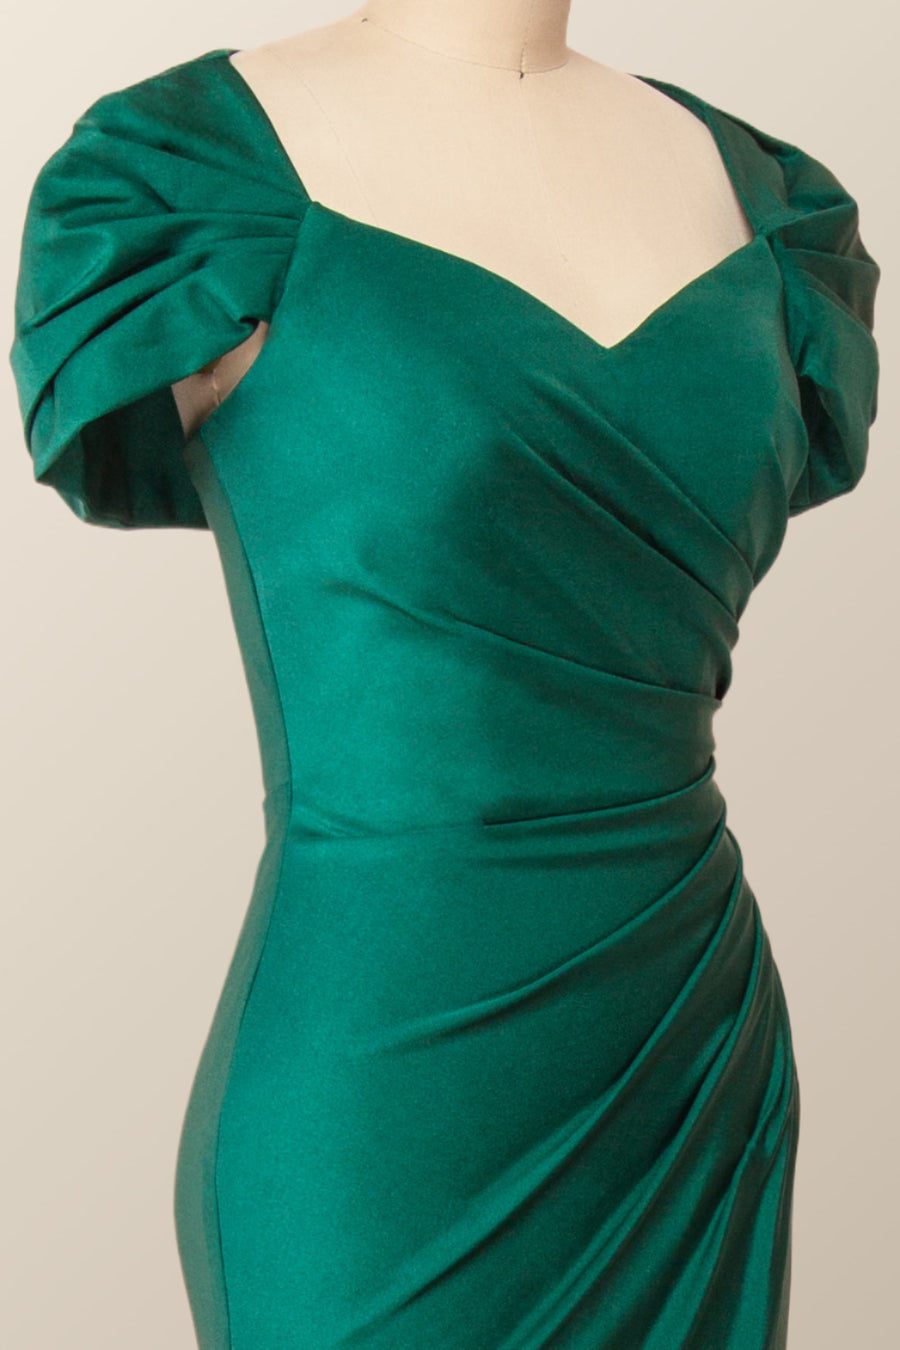 Cap Sleeves Green Memaid Long Formal Dress